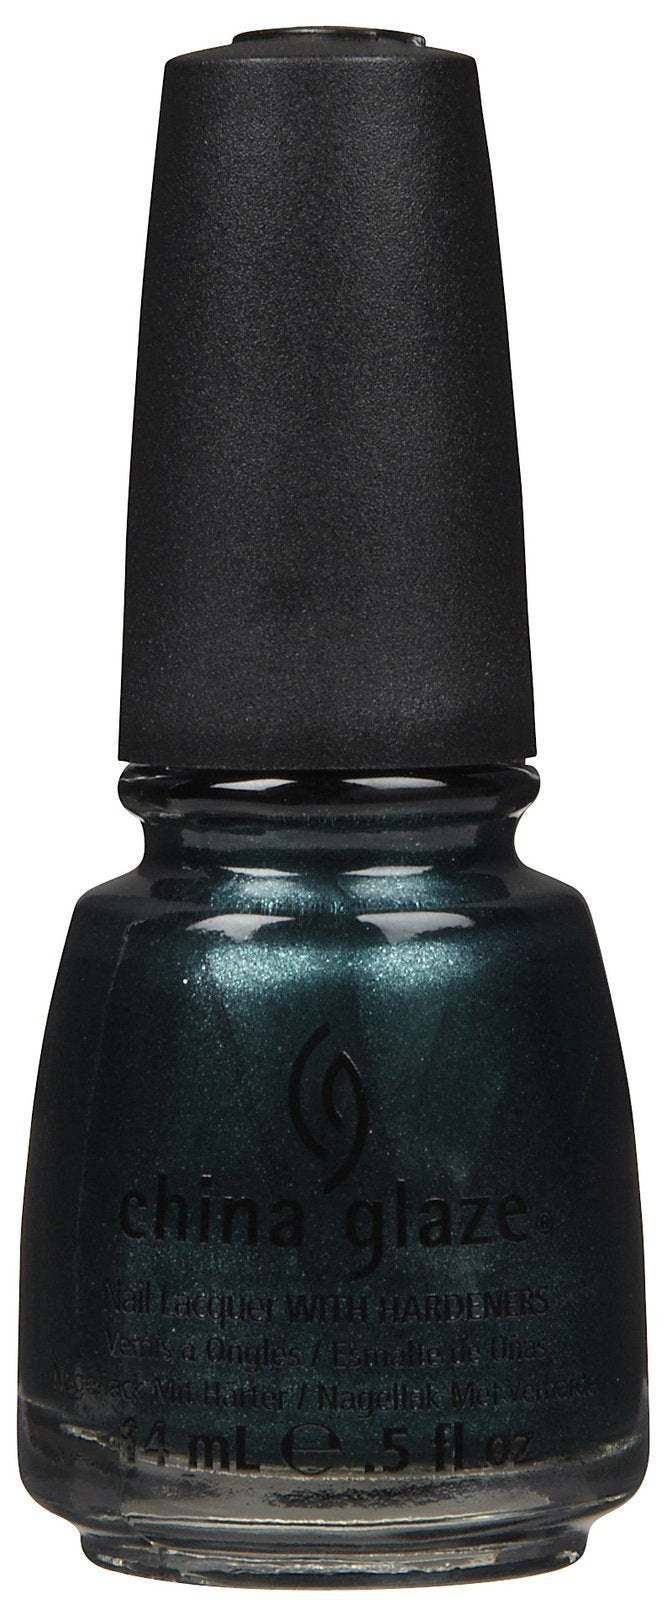 China Glaze - Emerald Fitzgerald 0.5 oz - #80511, Nail Lacquer - China Glaze, Sleek Nail